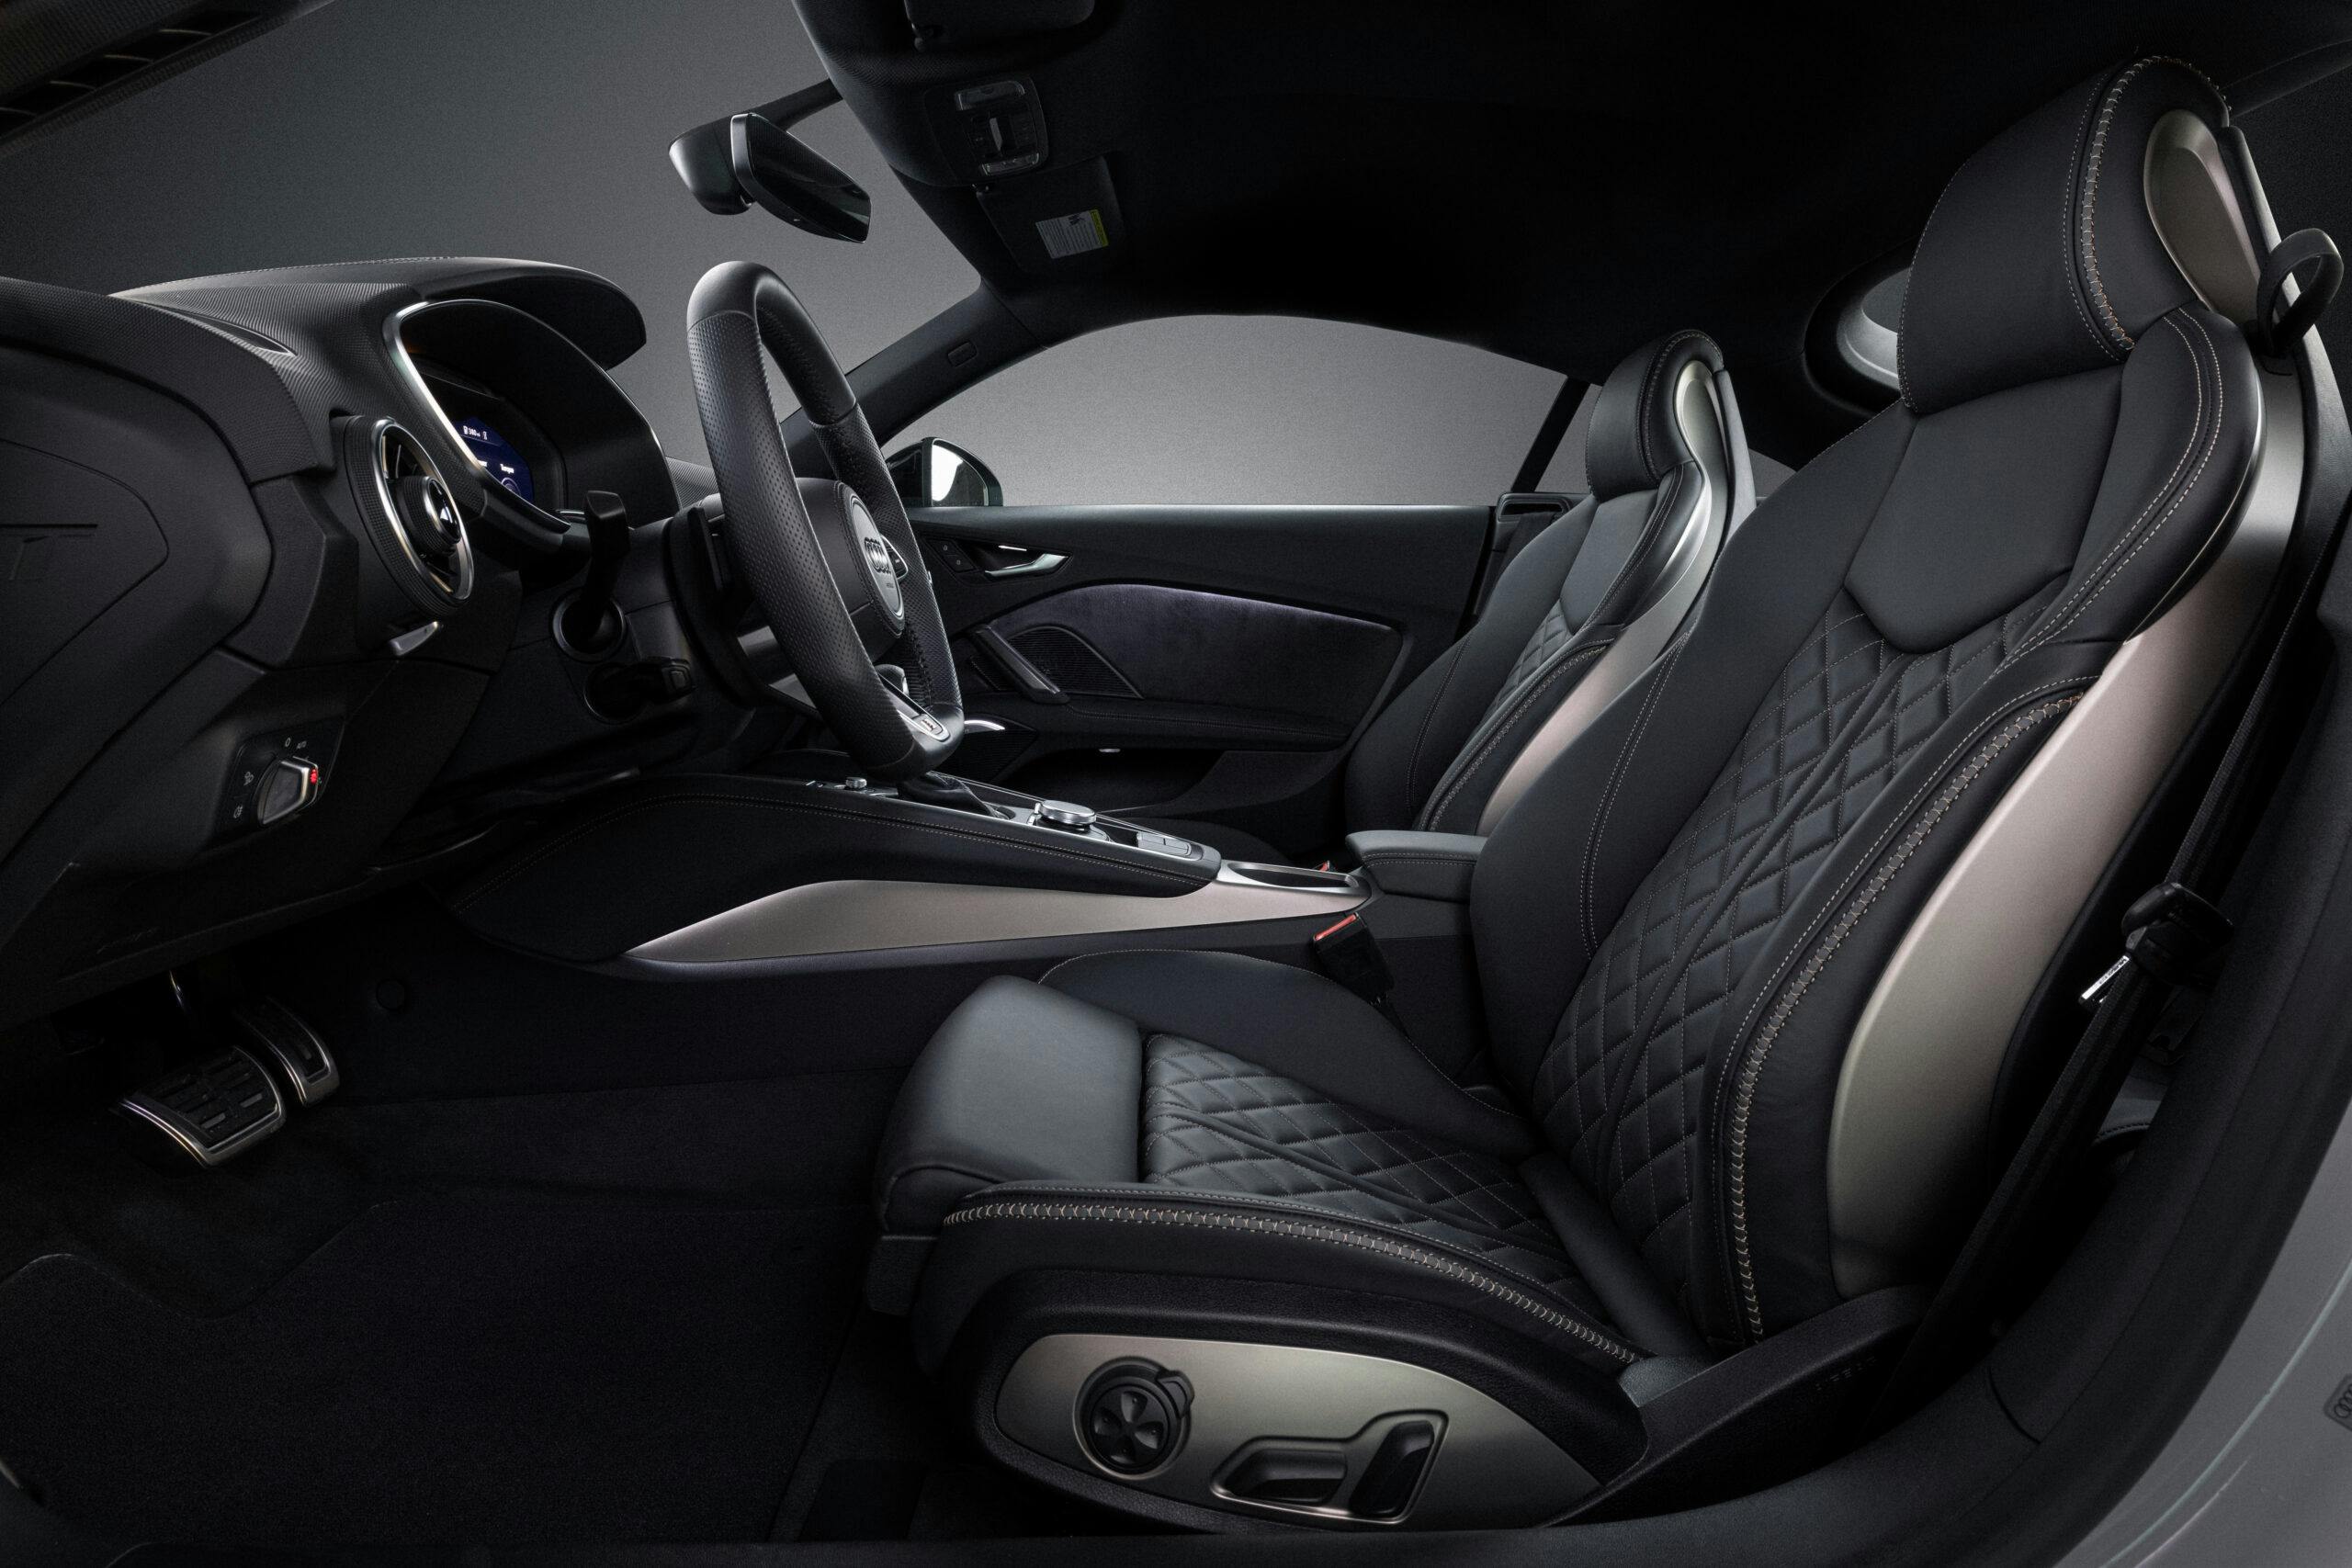 Audi TT interior front seats